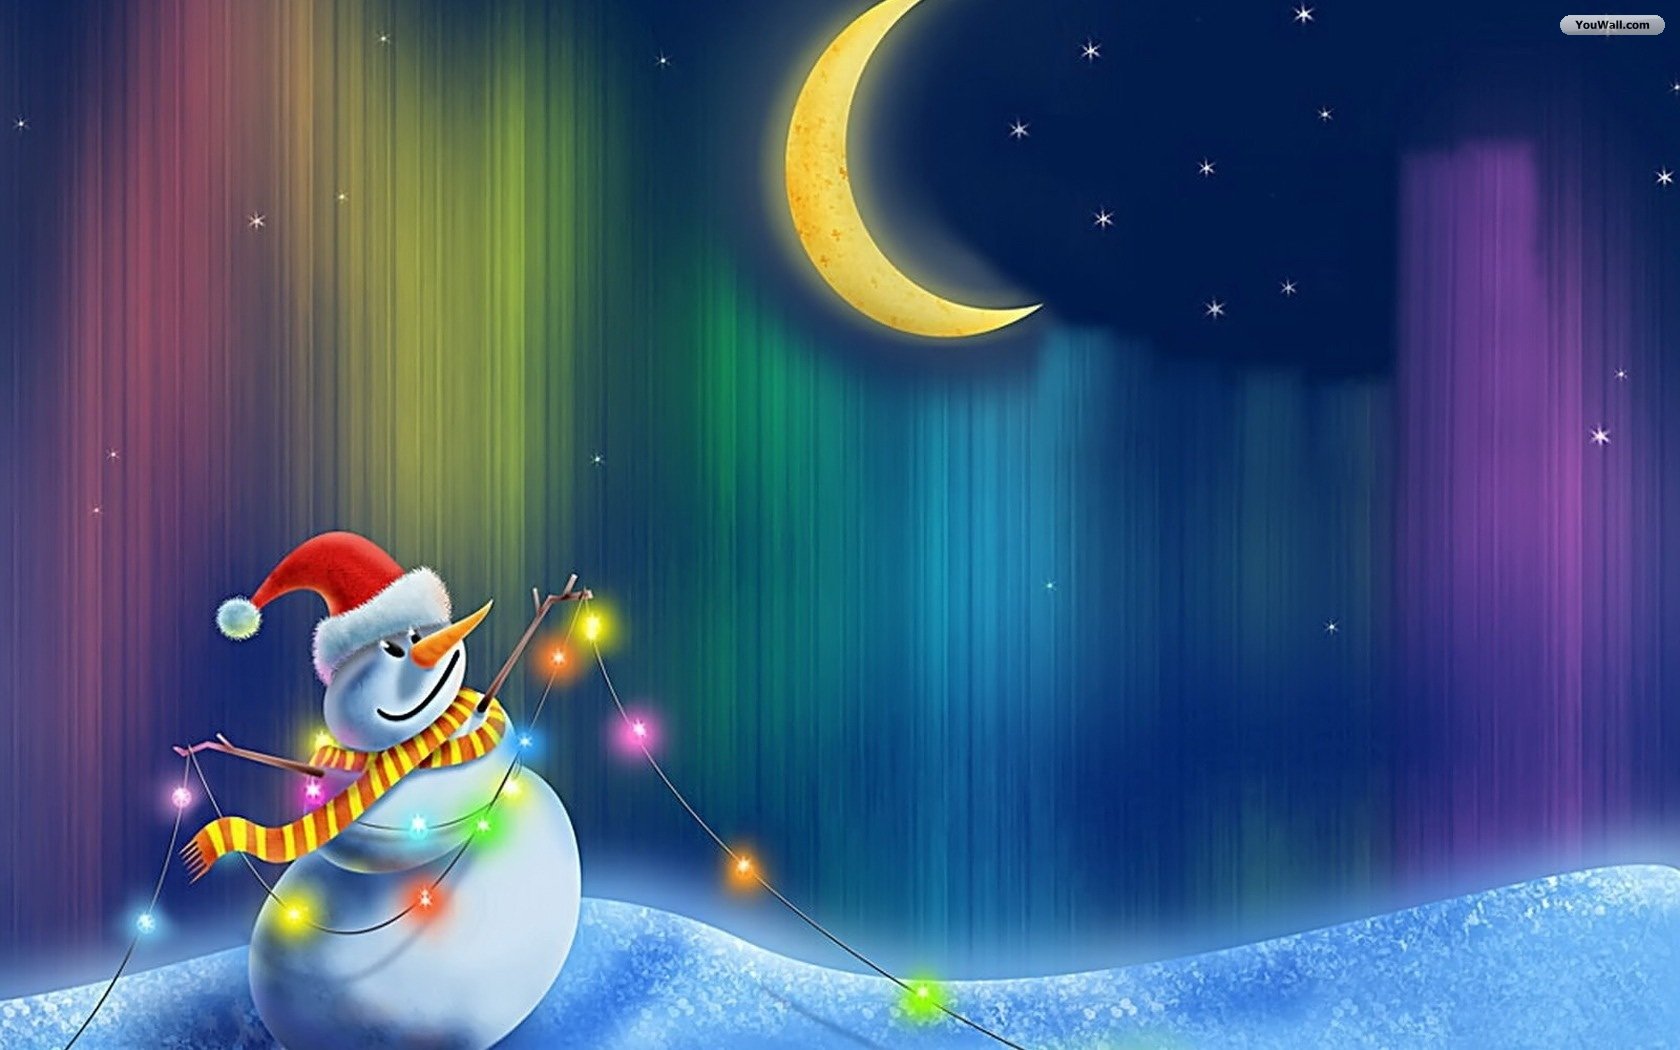  Snowman Wallpaper Christmas Hd   1680x1050 iWallHD   Wallpaper HD